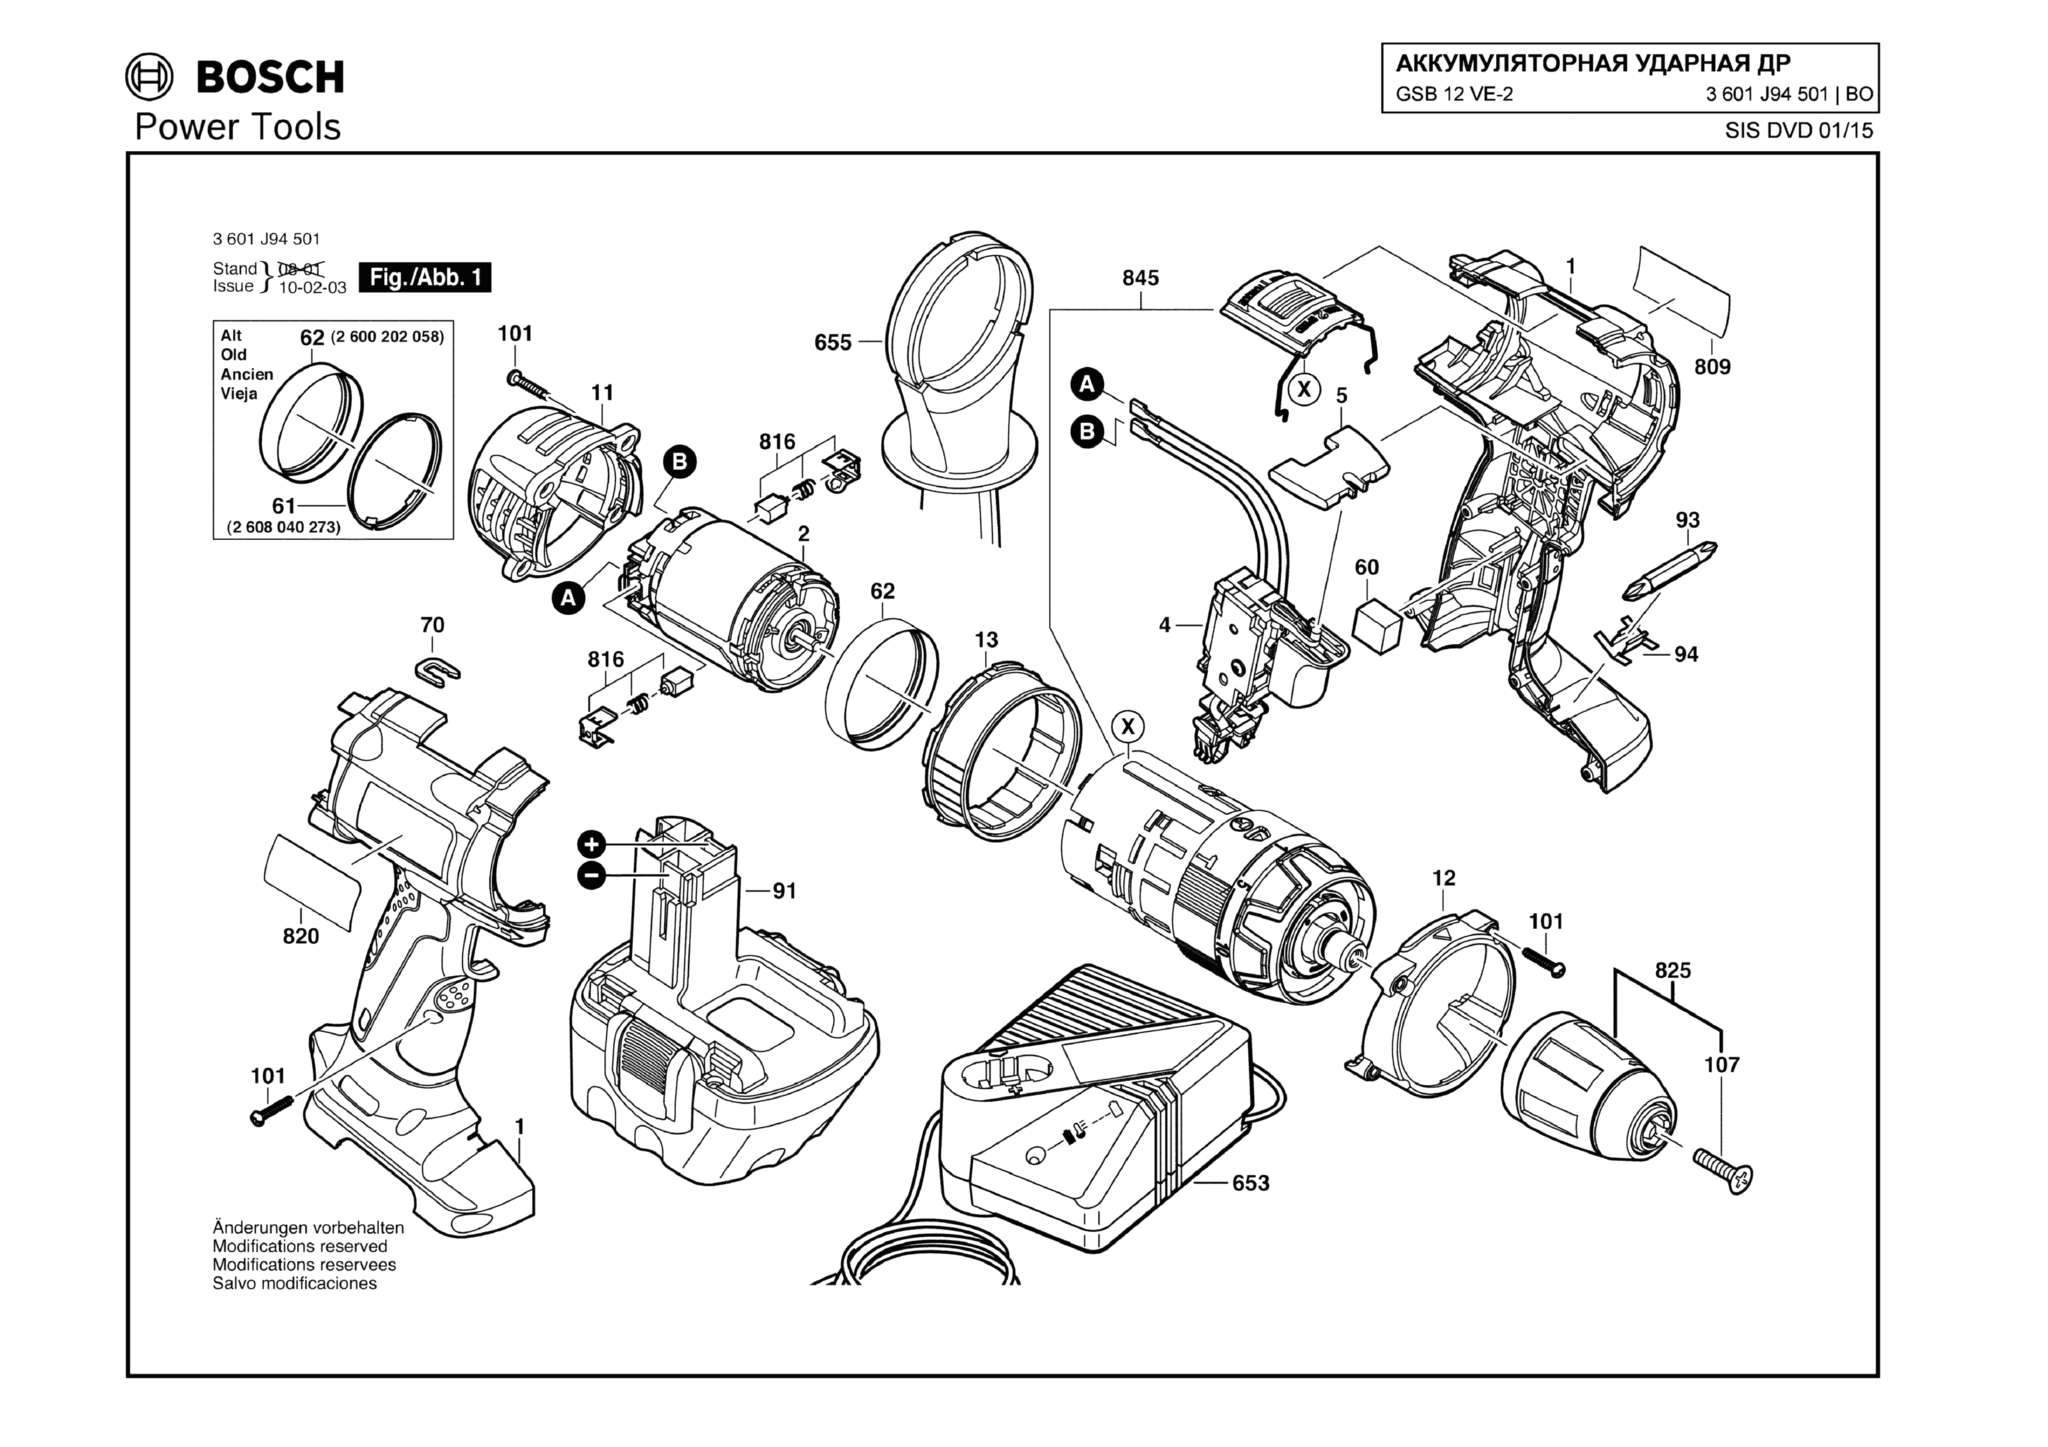 Запчасти, схема и деталировка Bosch GSB 12 VE-2 (ТИП 3601J94501)